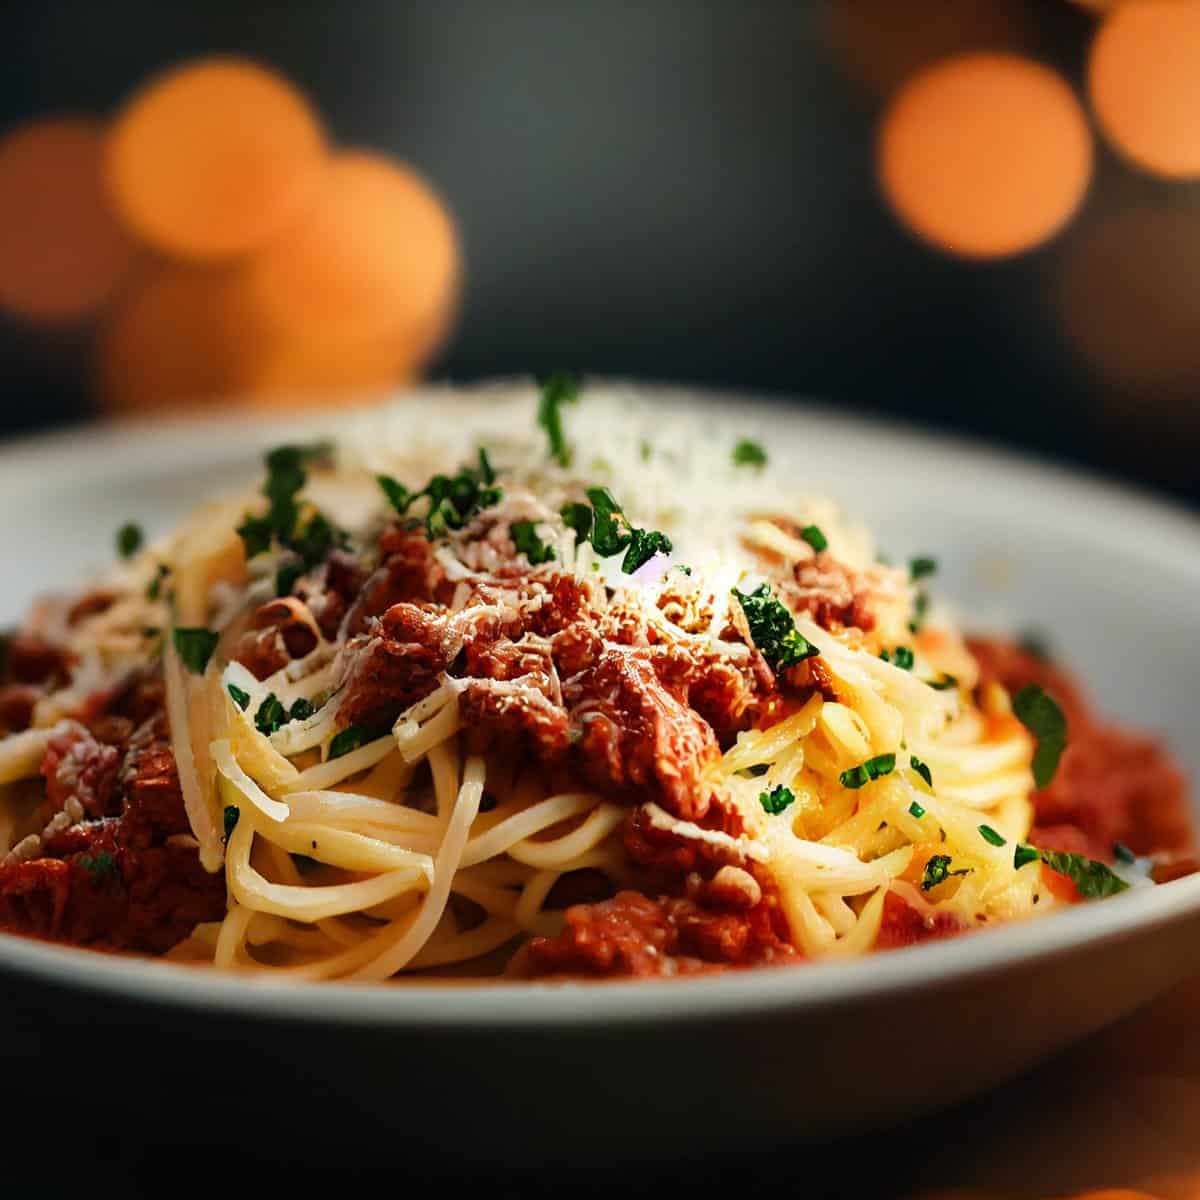 What is spaghetti